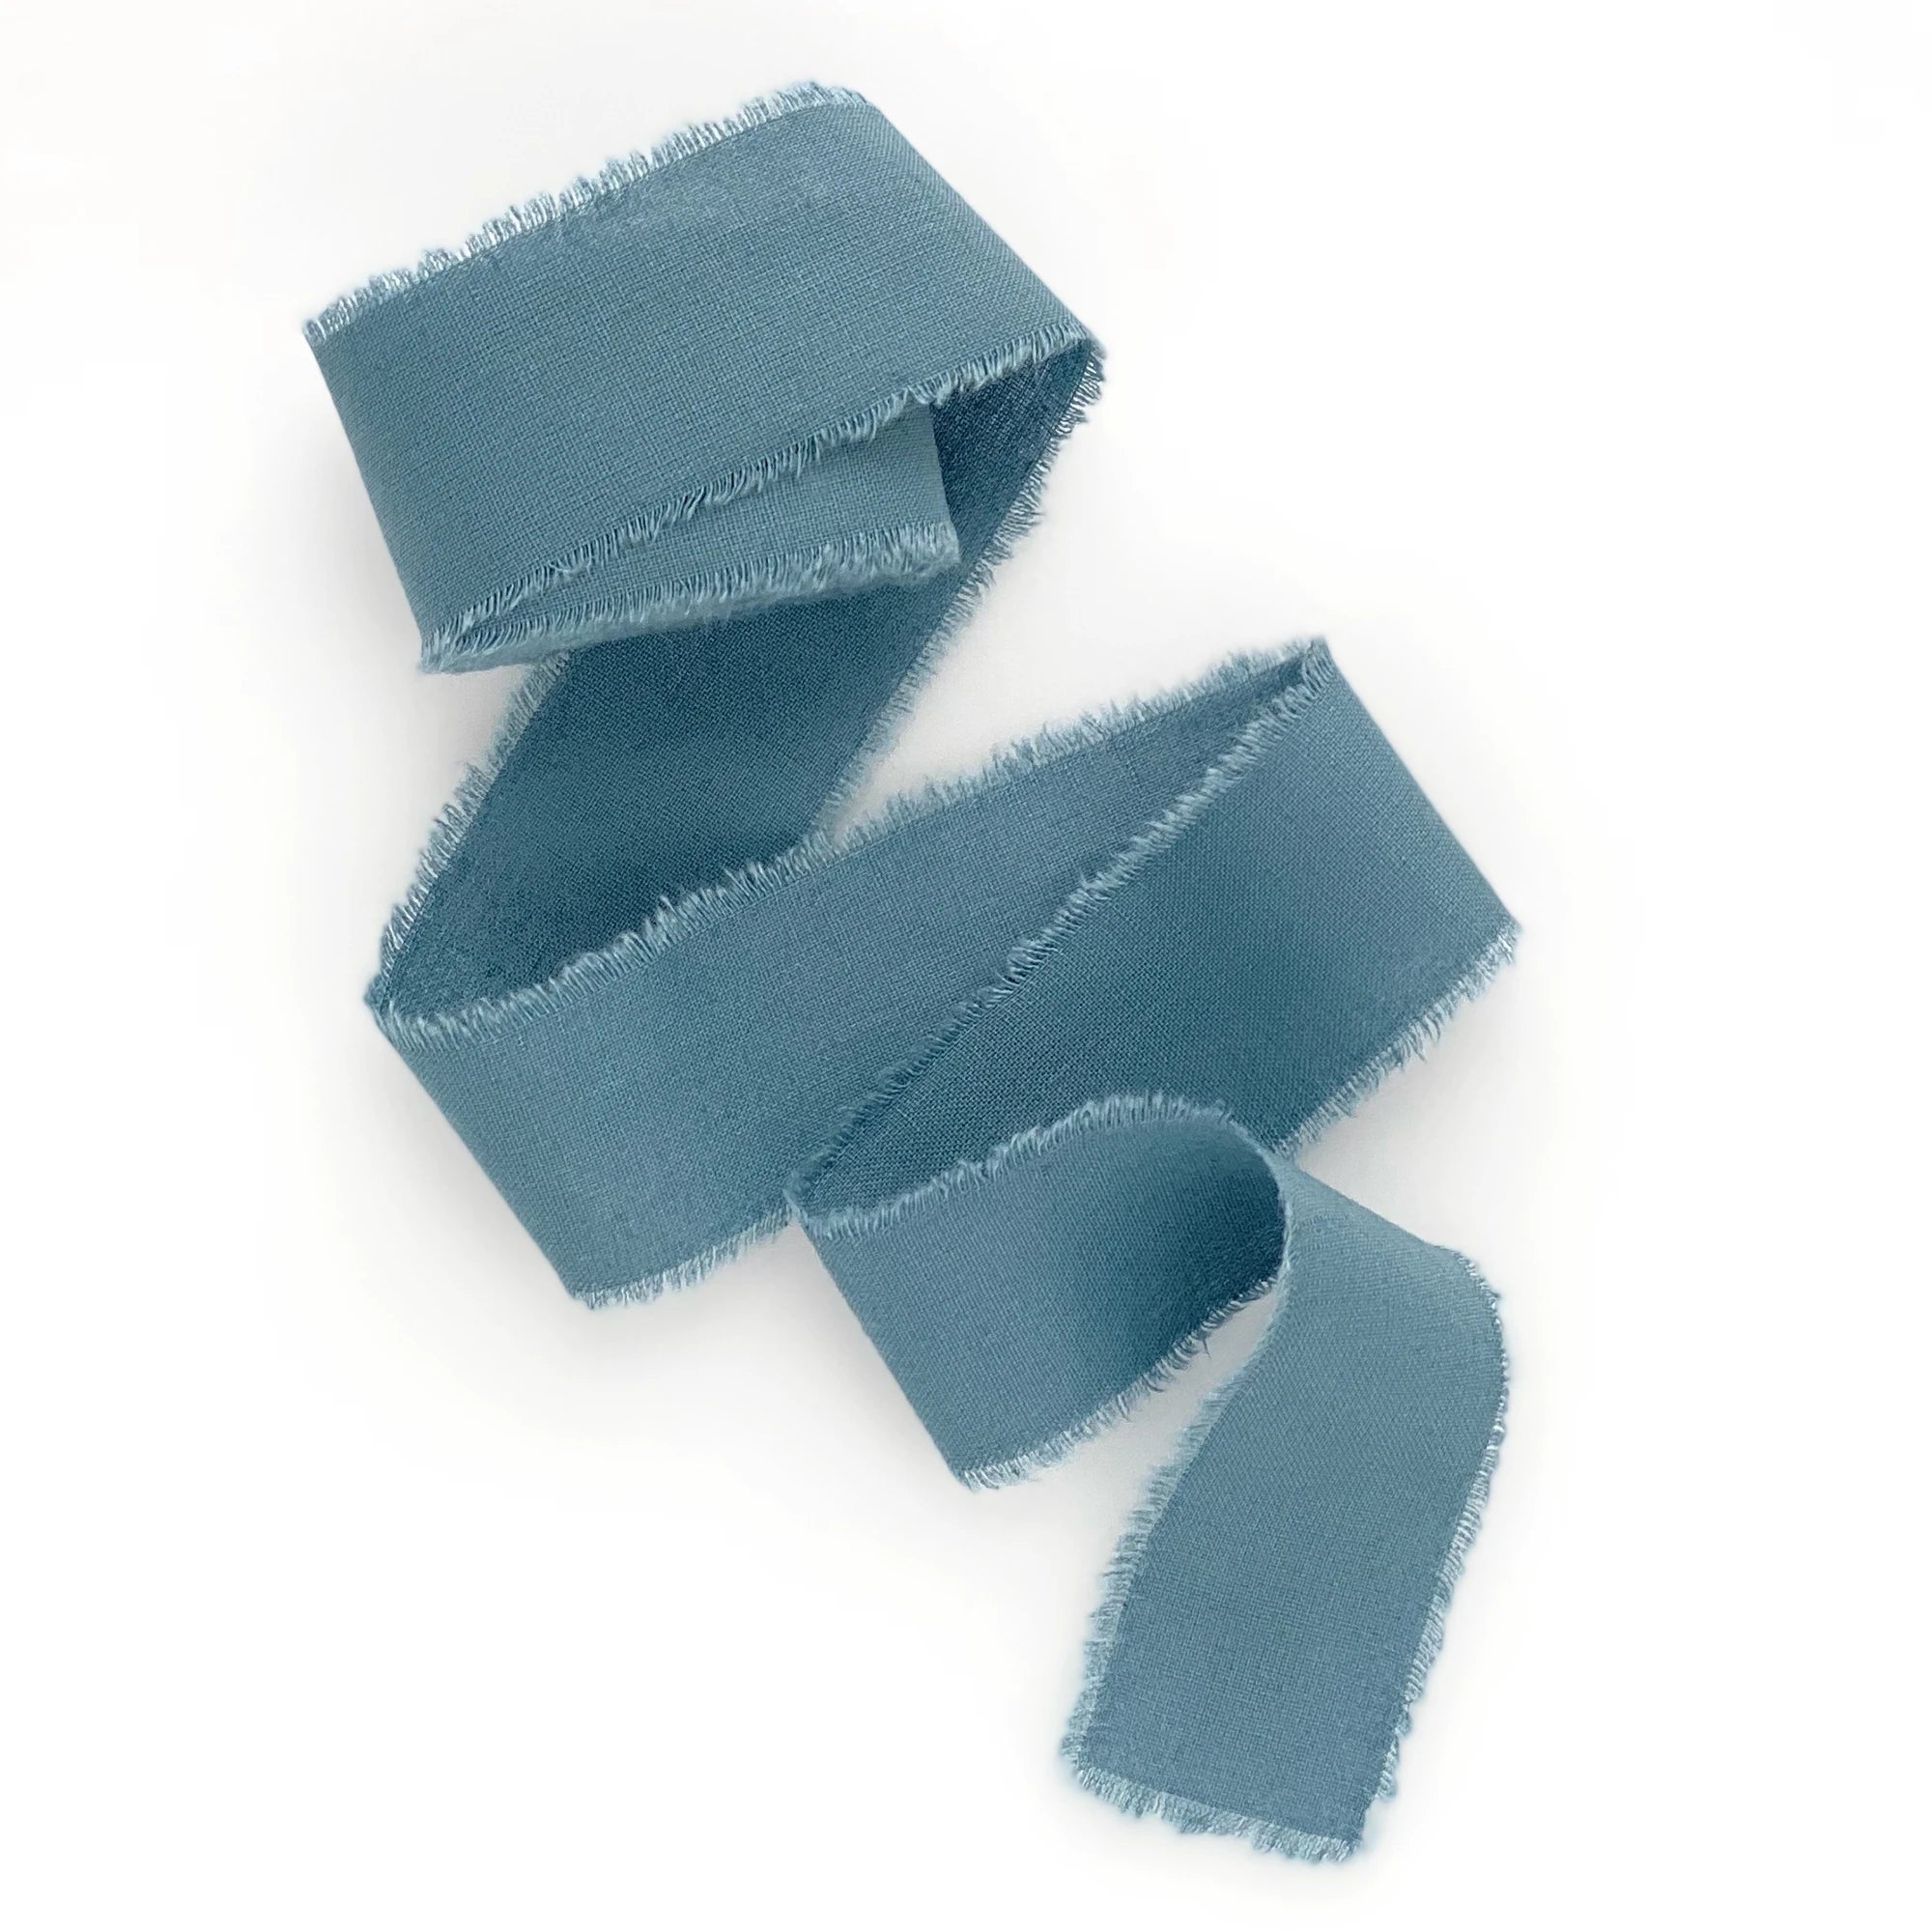 Dusty blue cotton ribbon